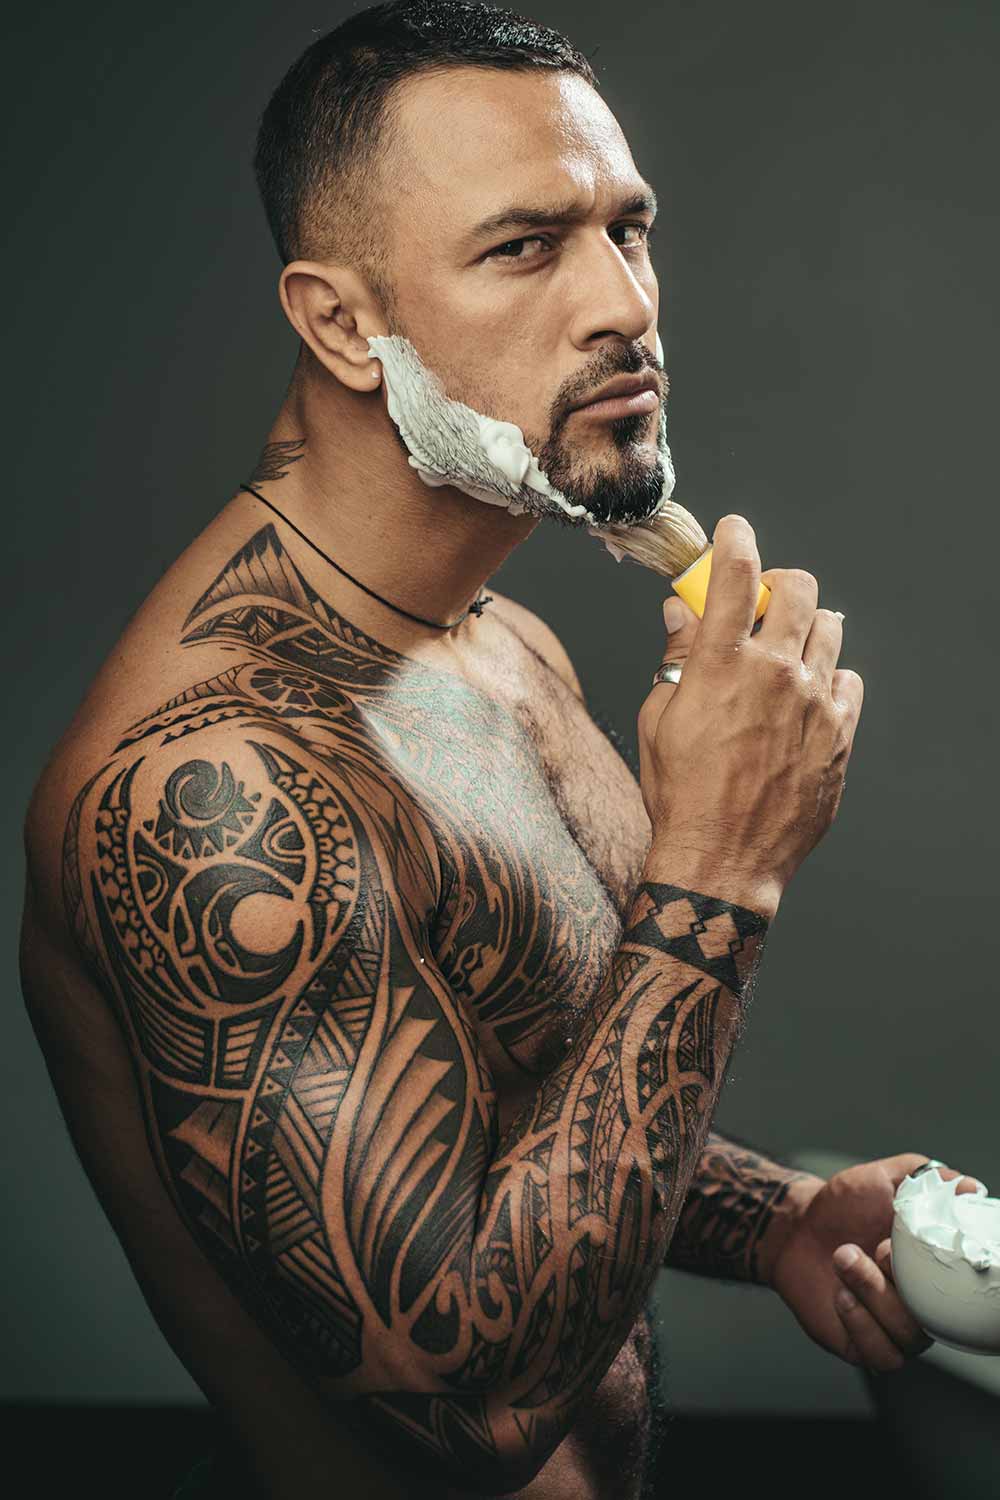 40 Best Tattoos for Men 2022 - Cool Tattoo Ideas